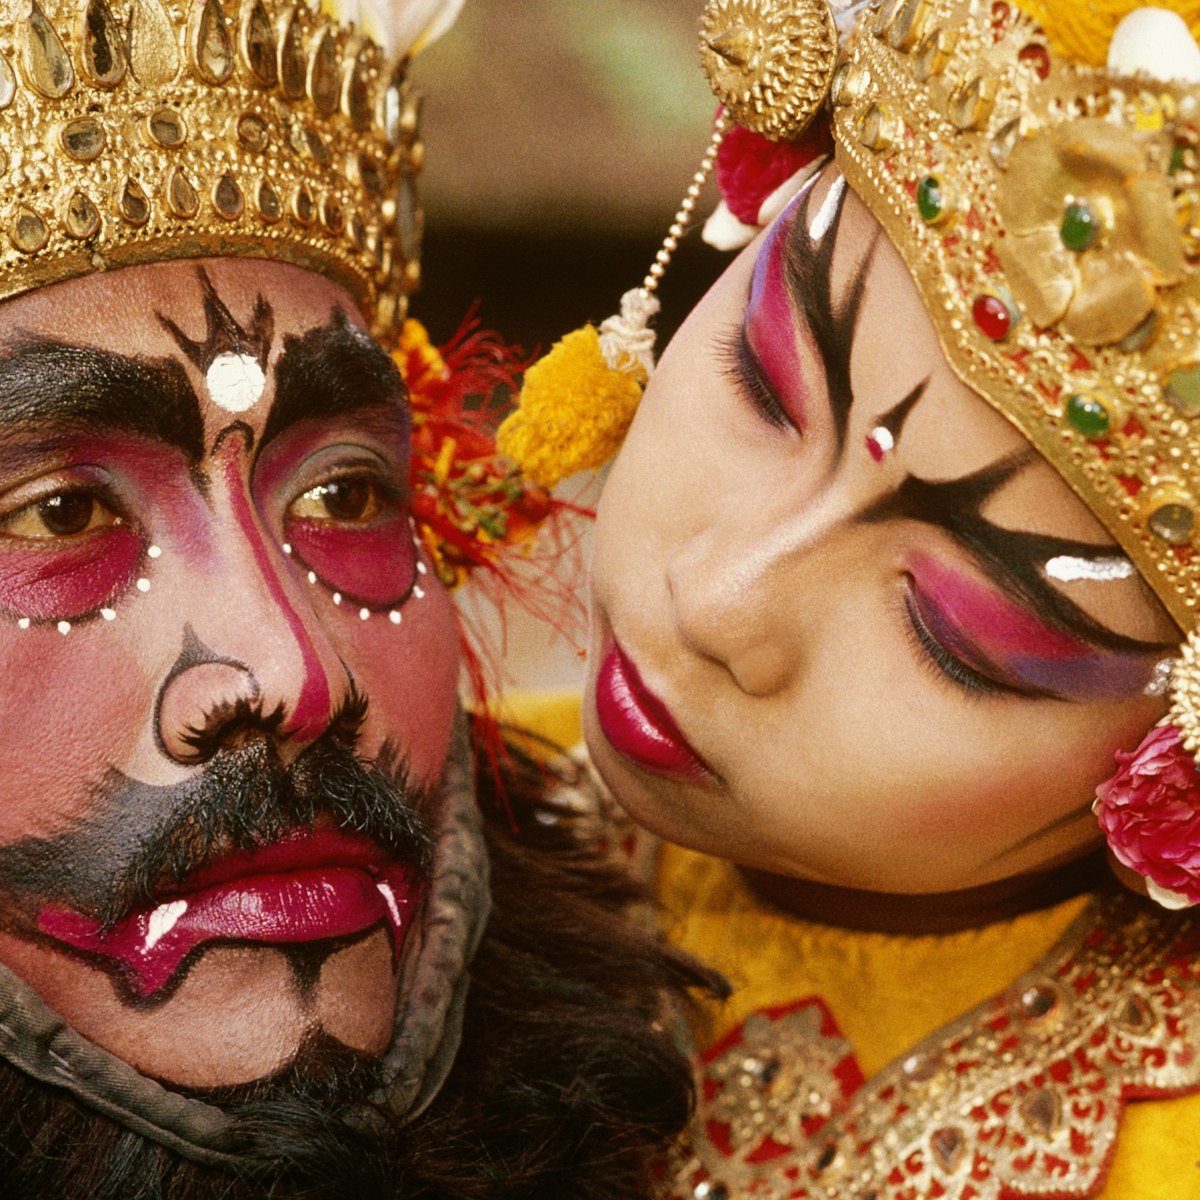 Indonesia, Bali, Kecak dancers in ceremonial dress and make up